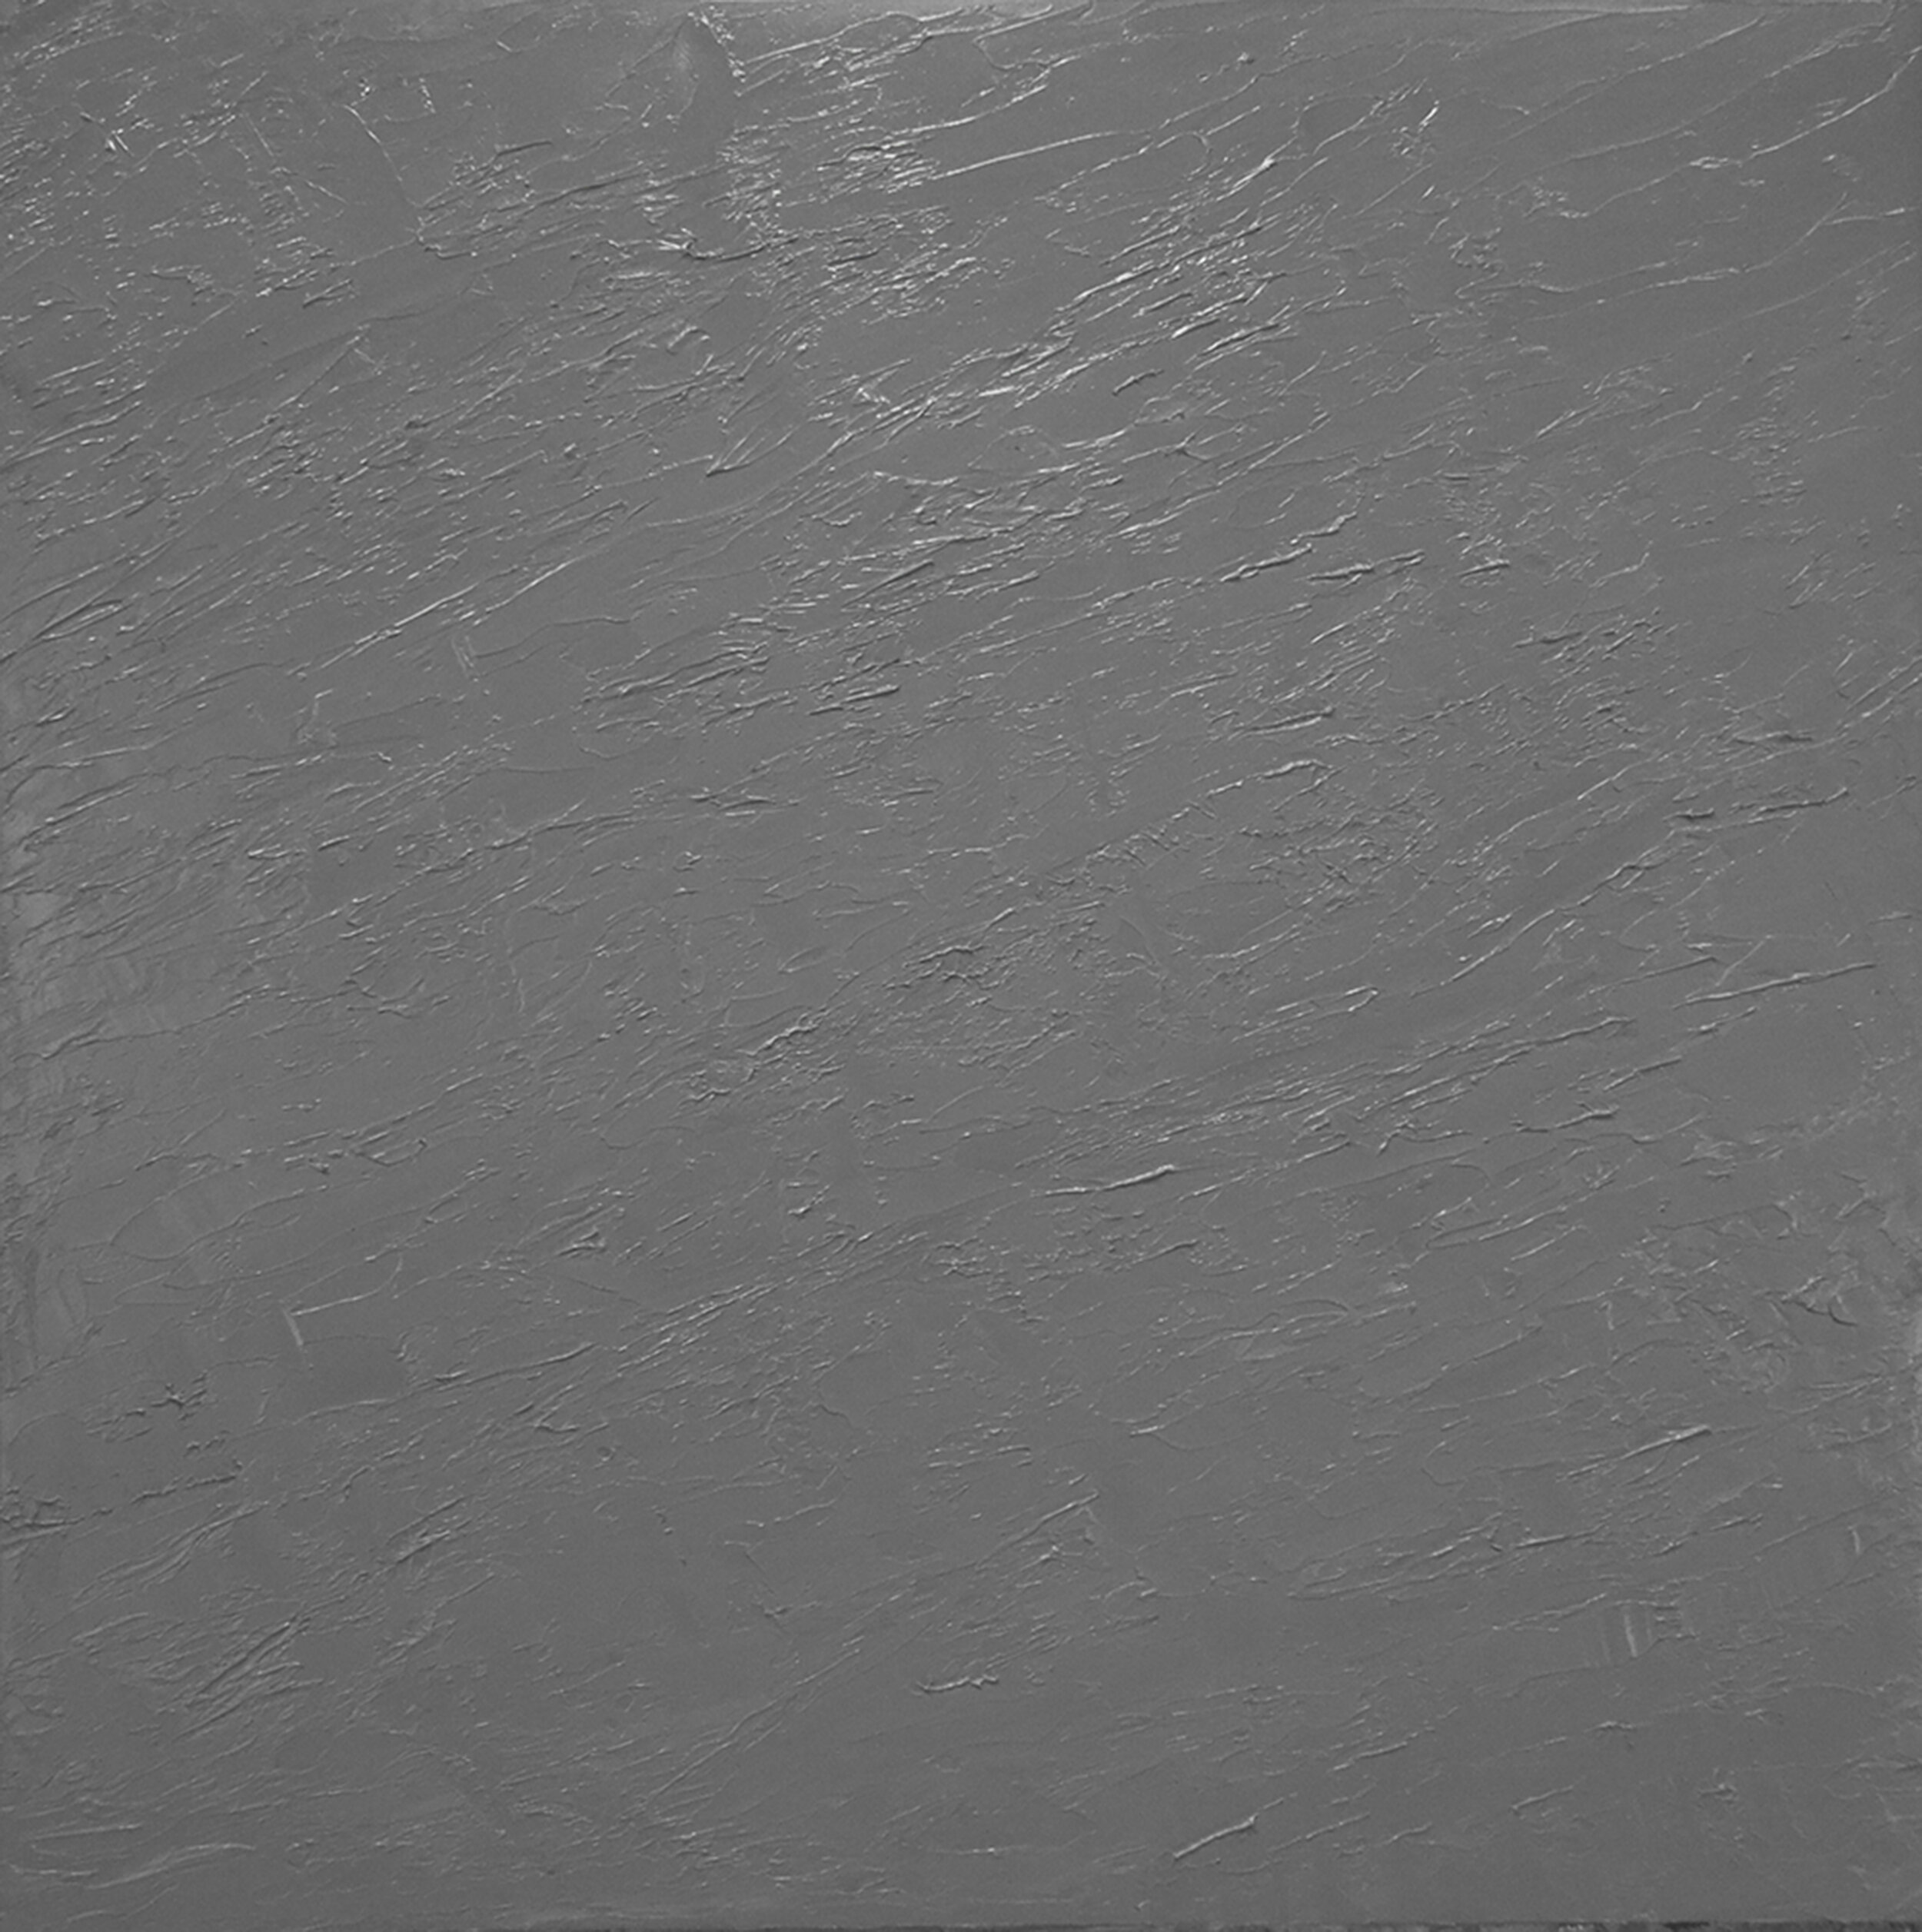 Lyshak_GreyTurbulance, 24 x 24 IN.jpg